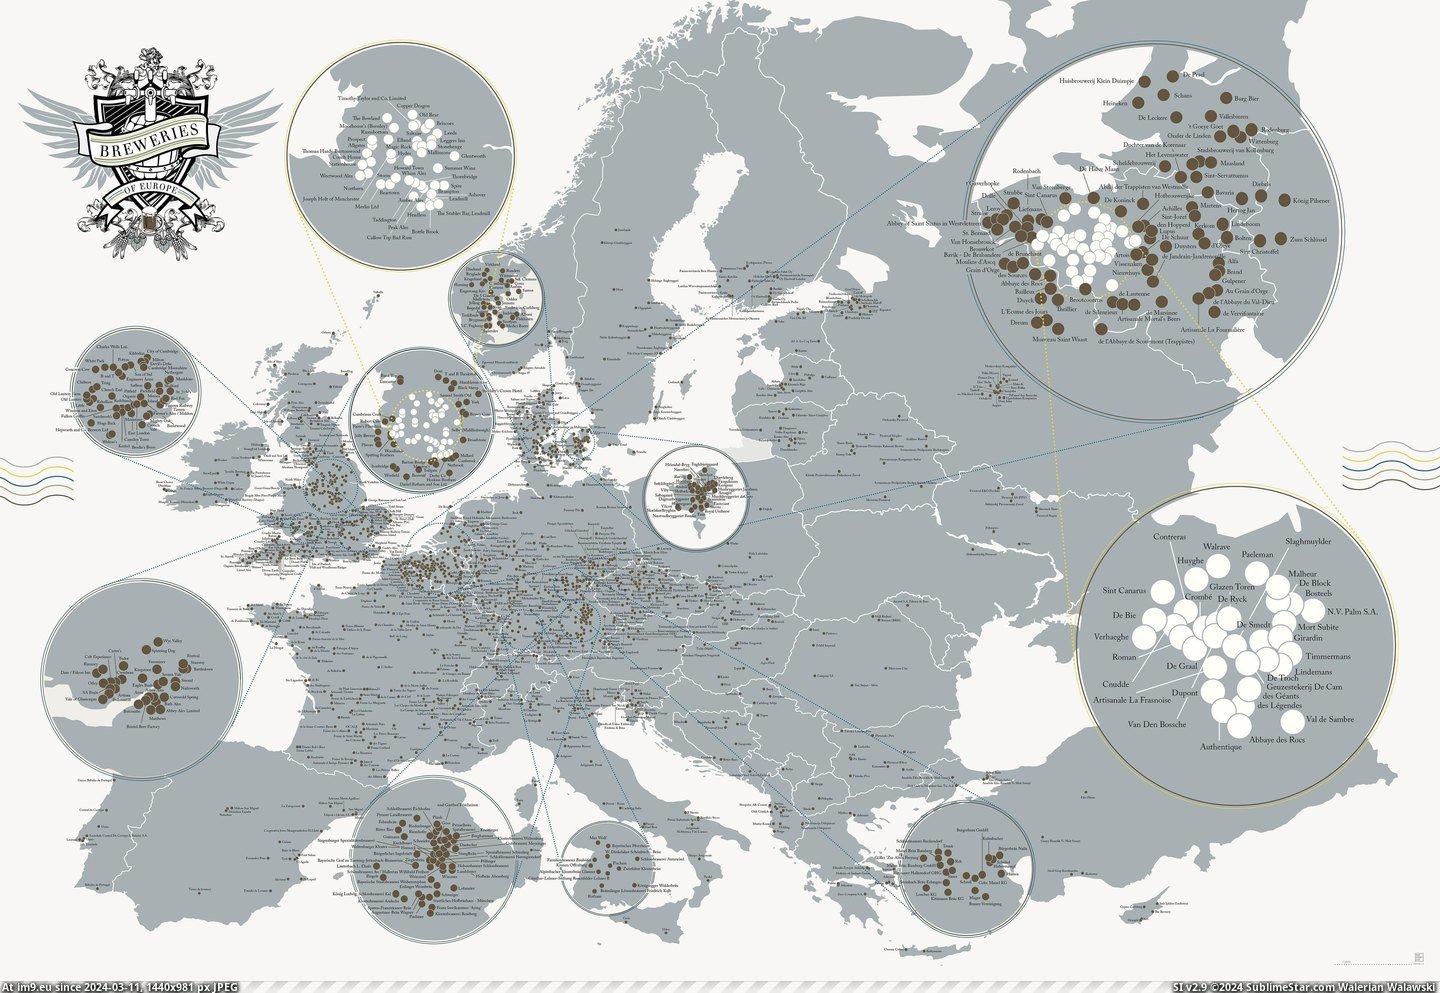 #Europe  #Breweries [Mapporn] All The Breweries of Europe [4200x2872] Pic. (Bild von album My r/MAPS favs))